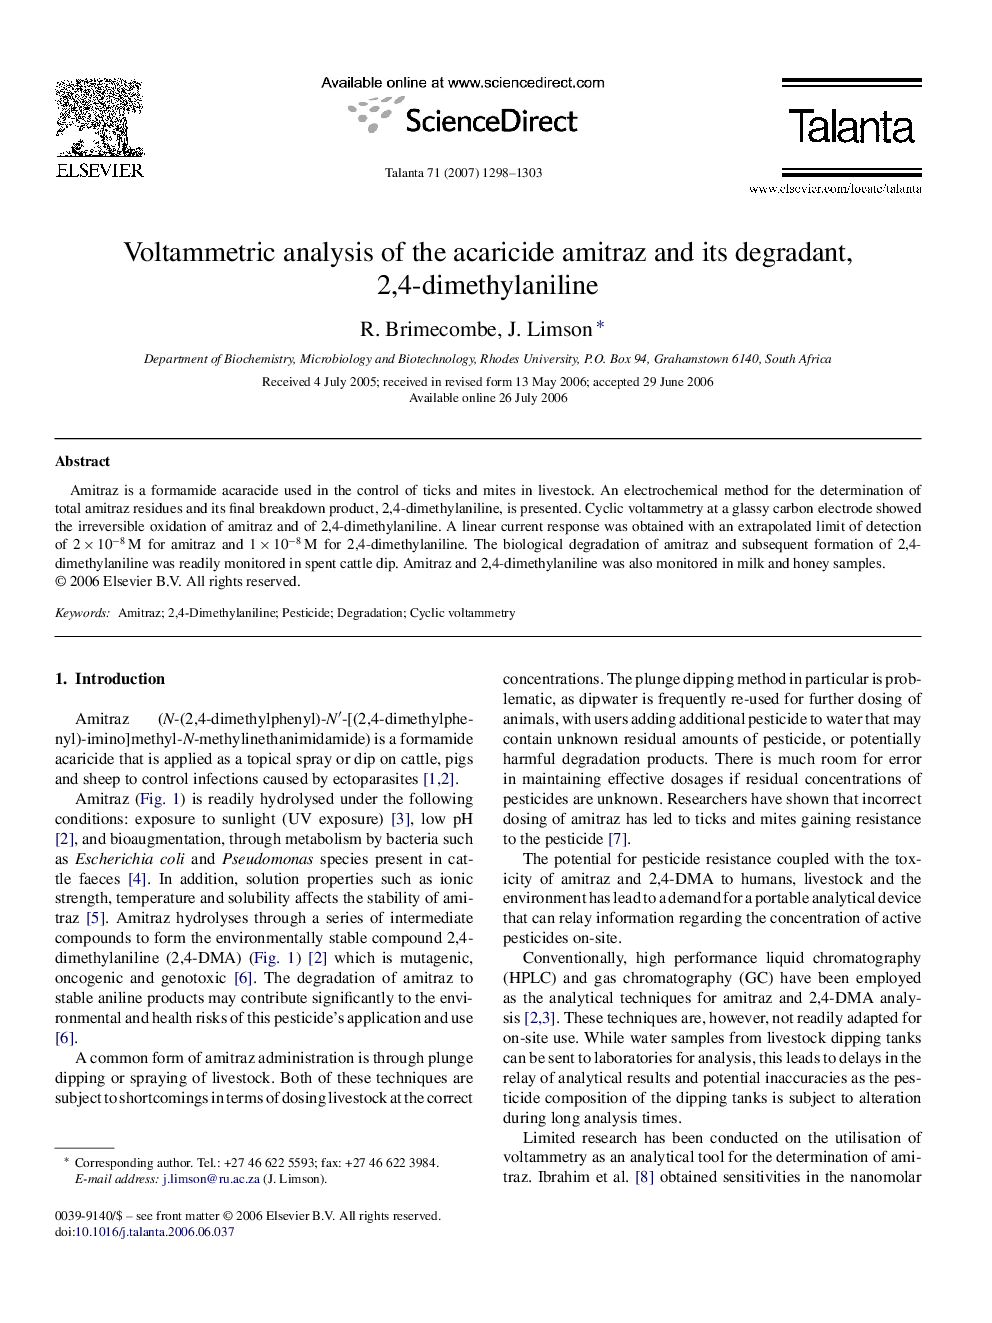 Voltammetric analysis of the acaricide amitraz and its degradant, 2,4-dimethylaniline